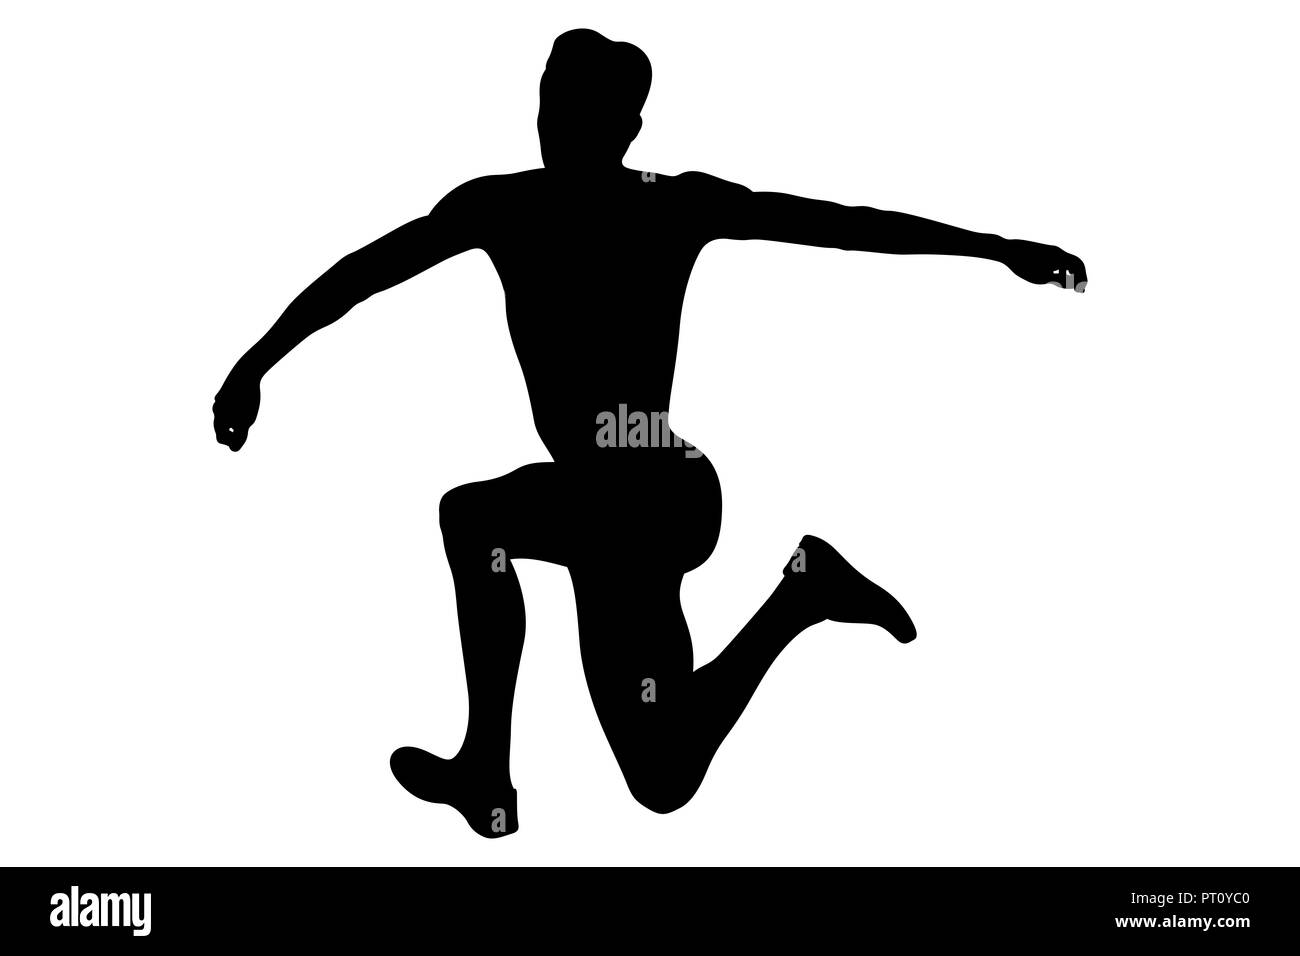 jump athlete in triple jump black silhouette Stock Photo